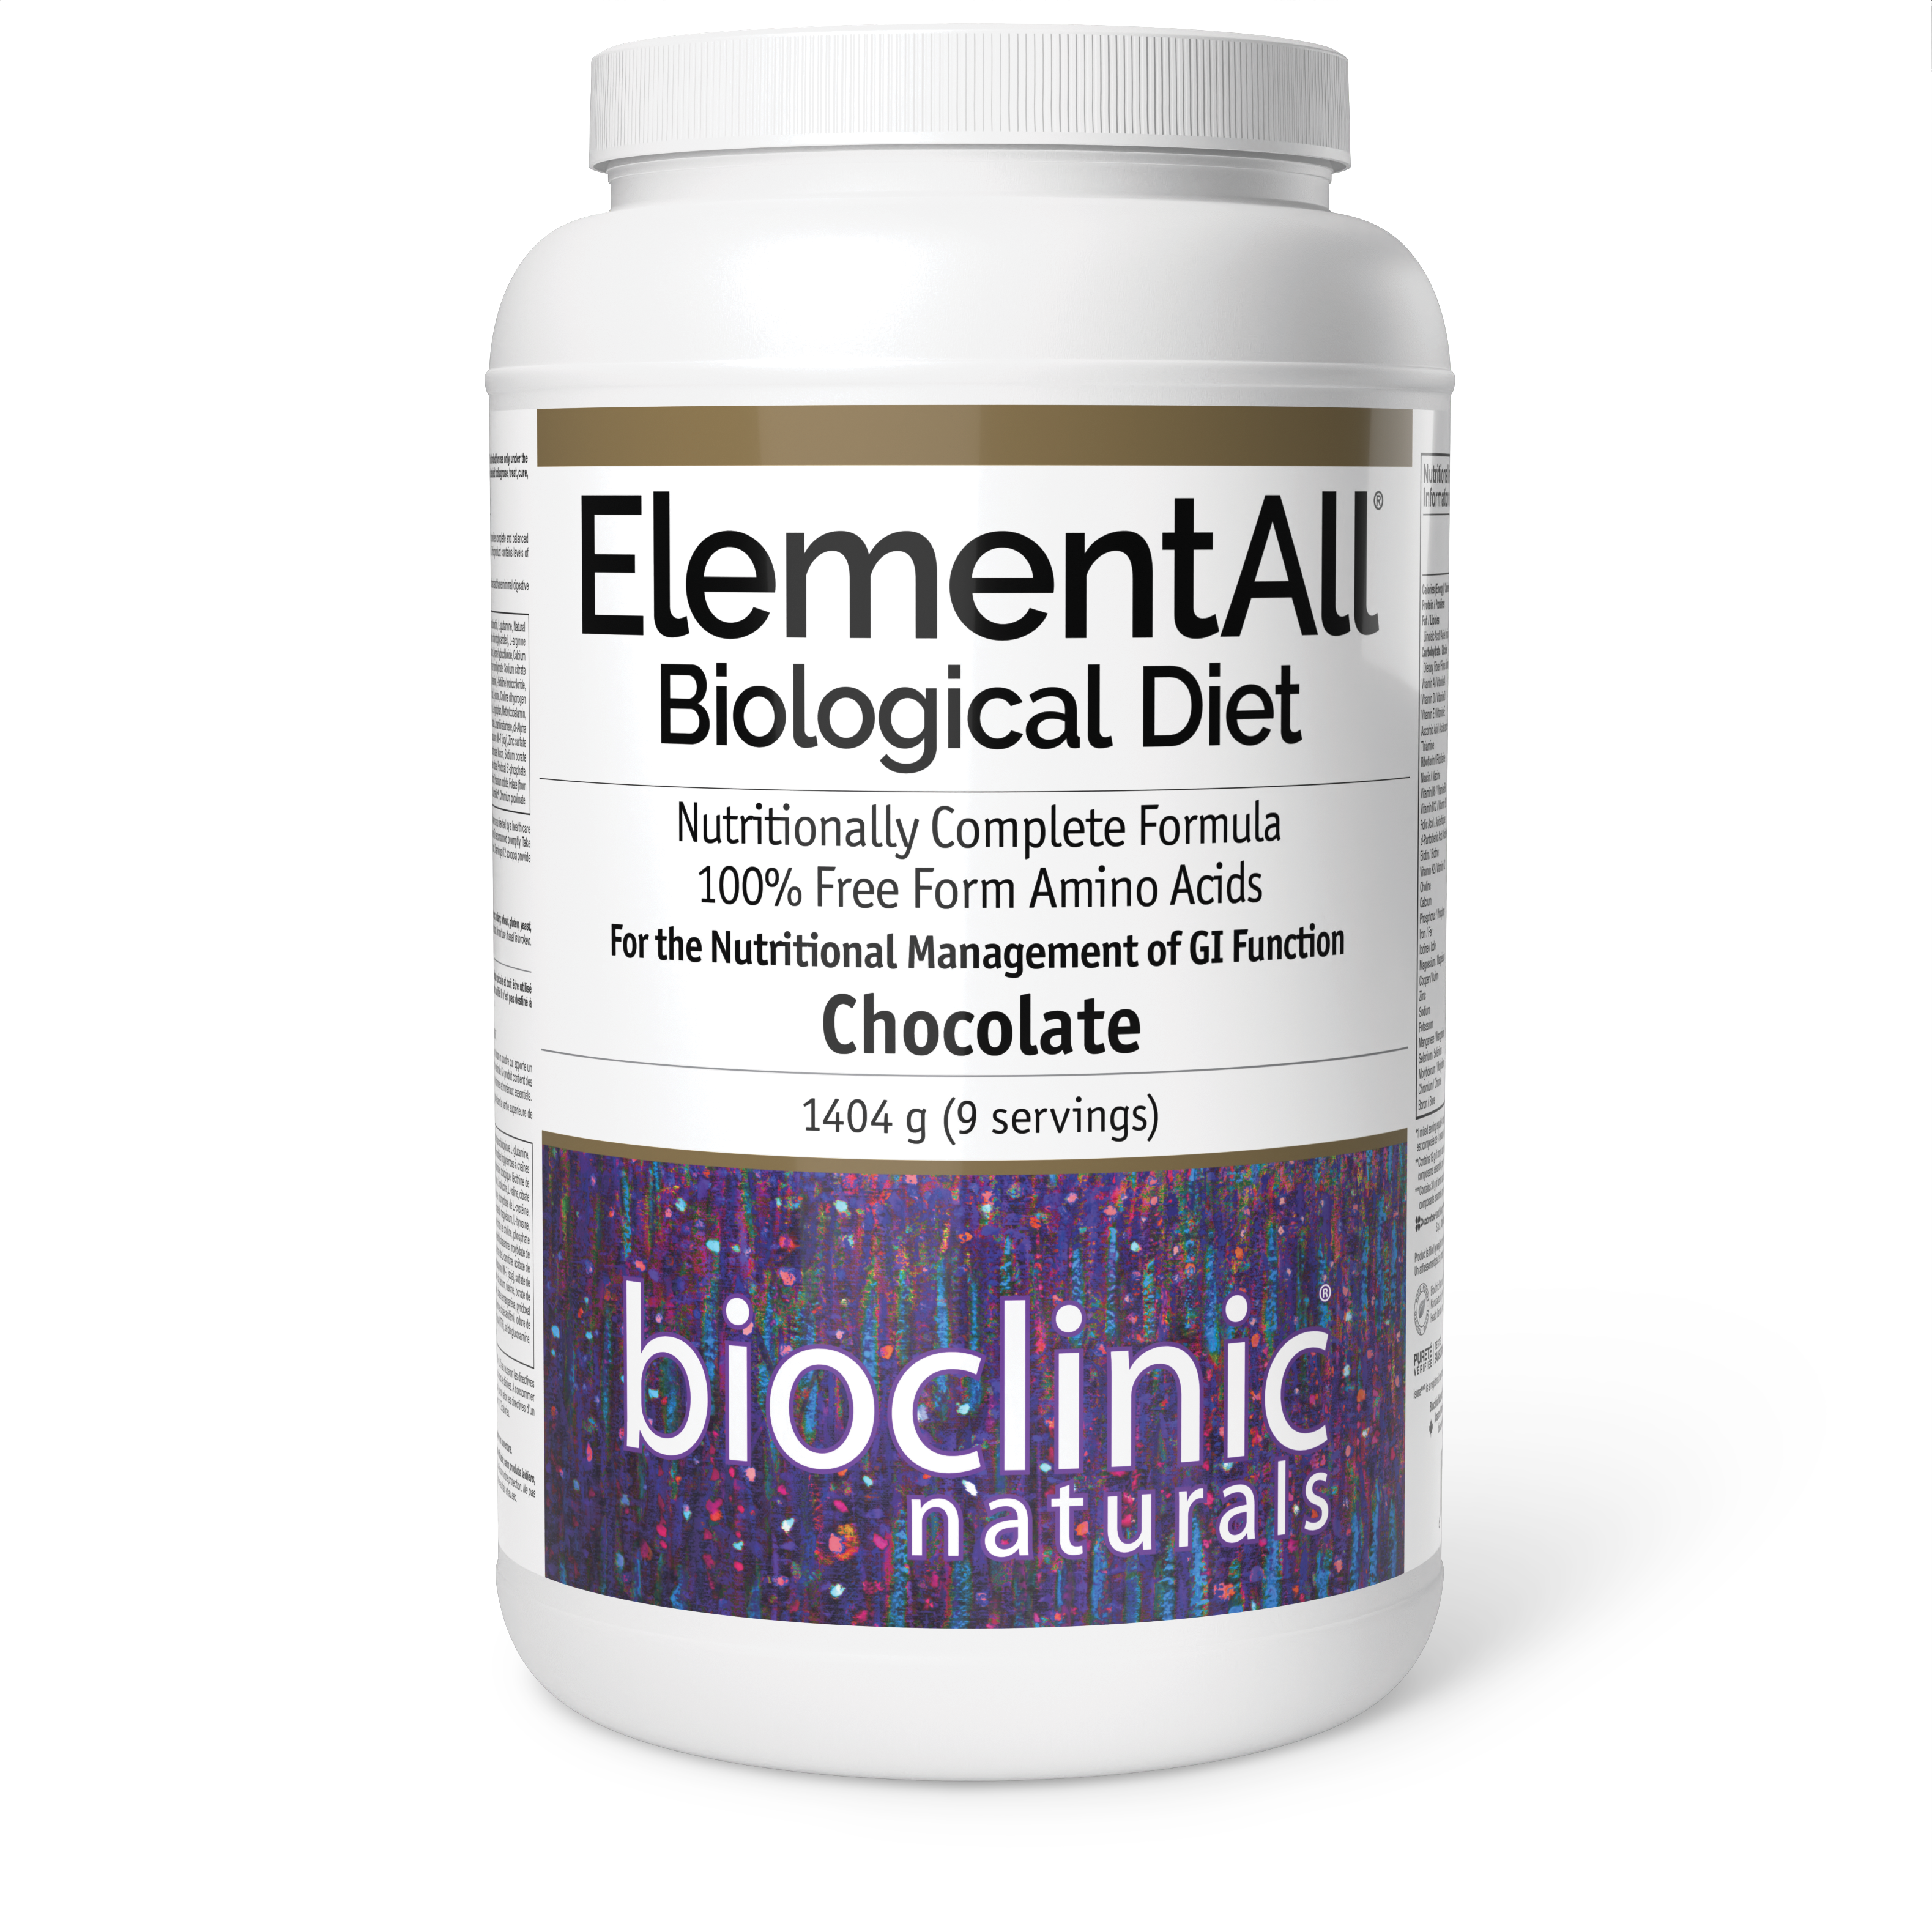 Bioclinic Naturals ElementAll Biological Diet Chocolate 1404g